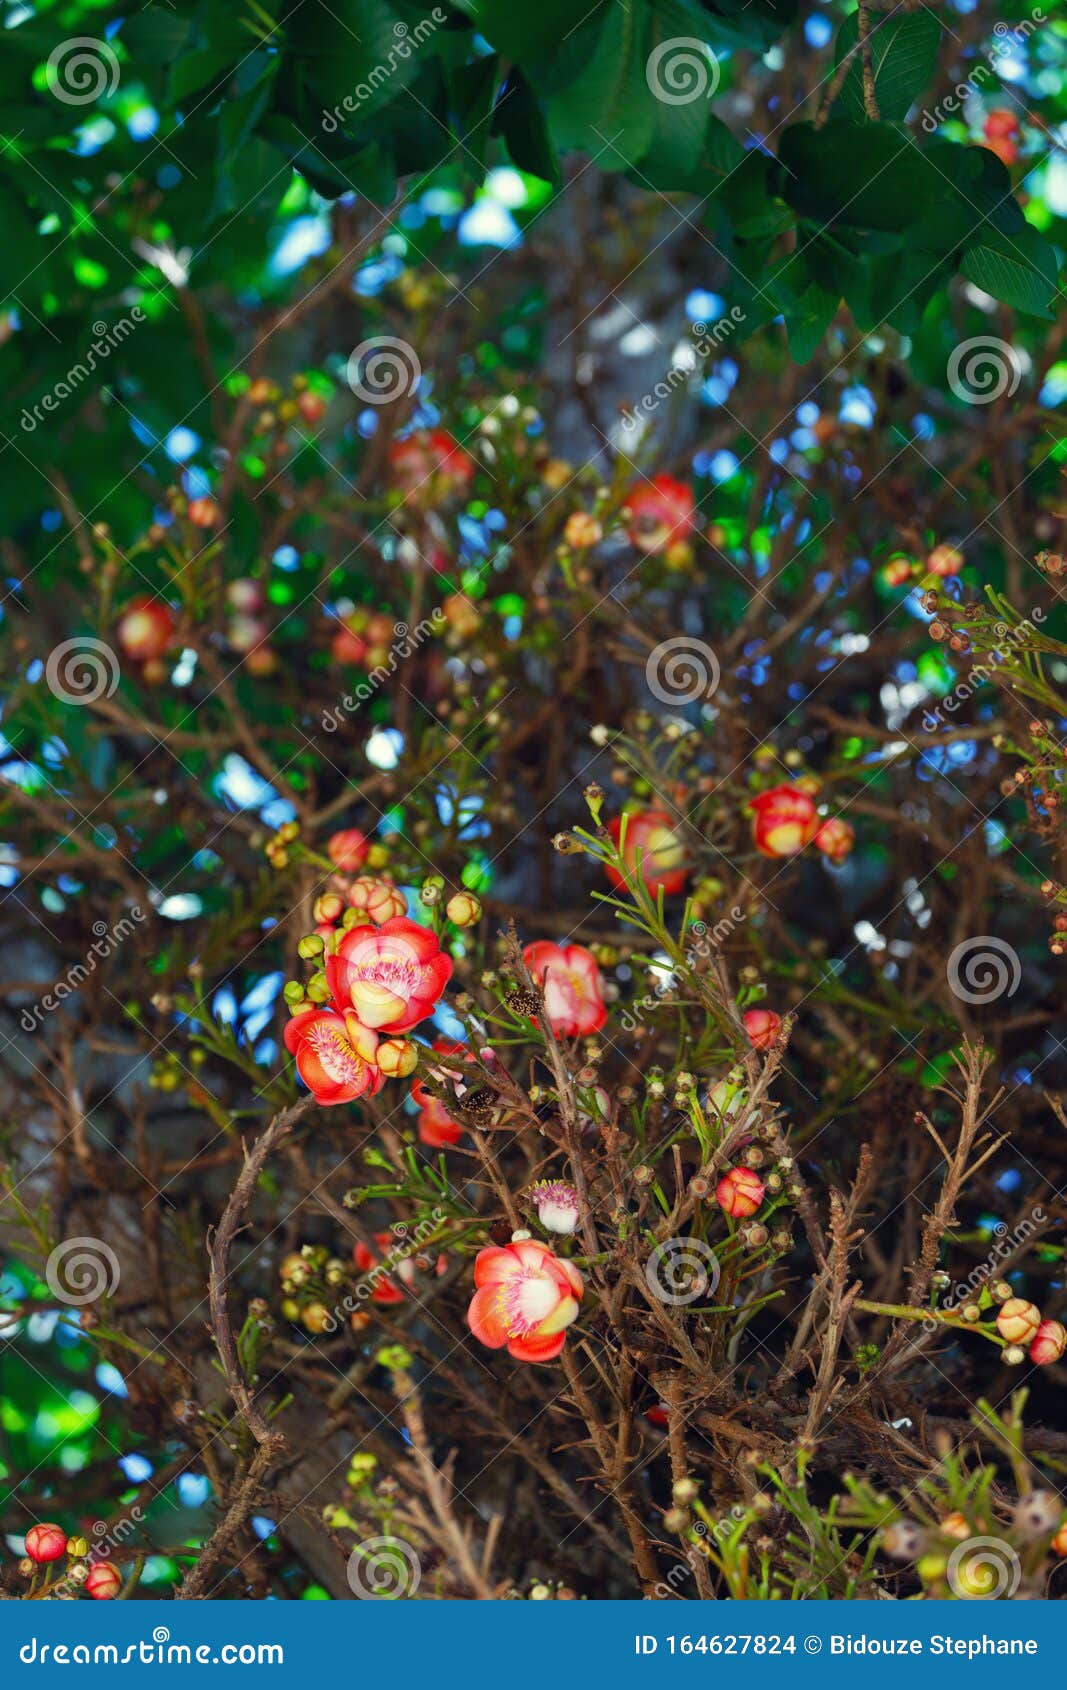 shorea robusta flowers